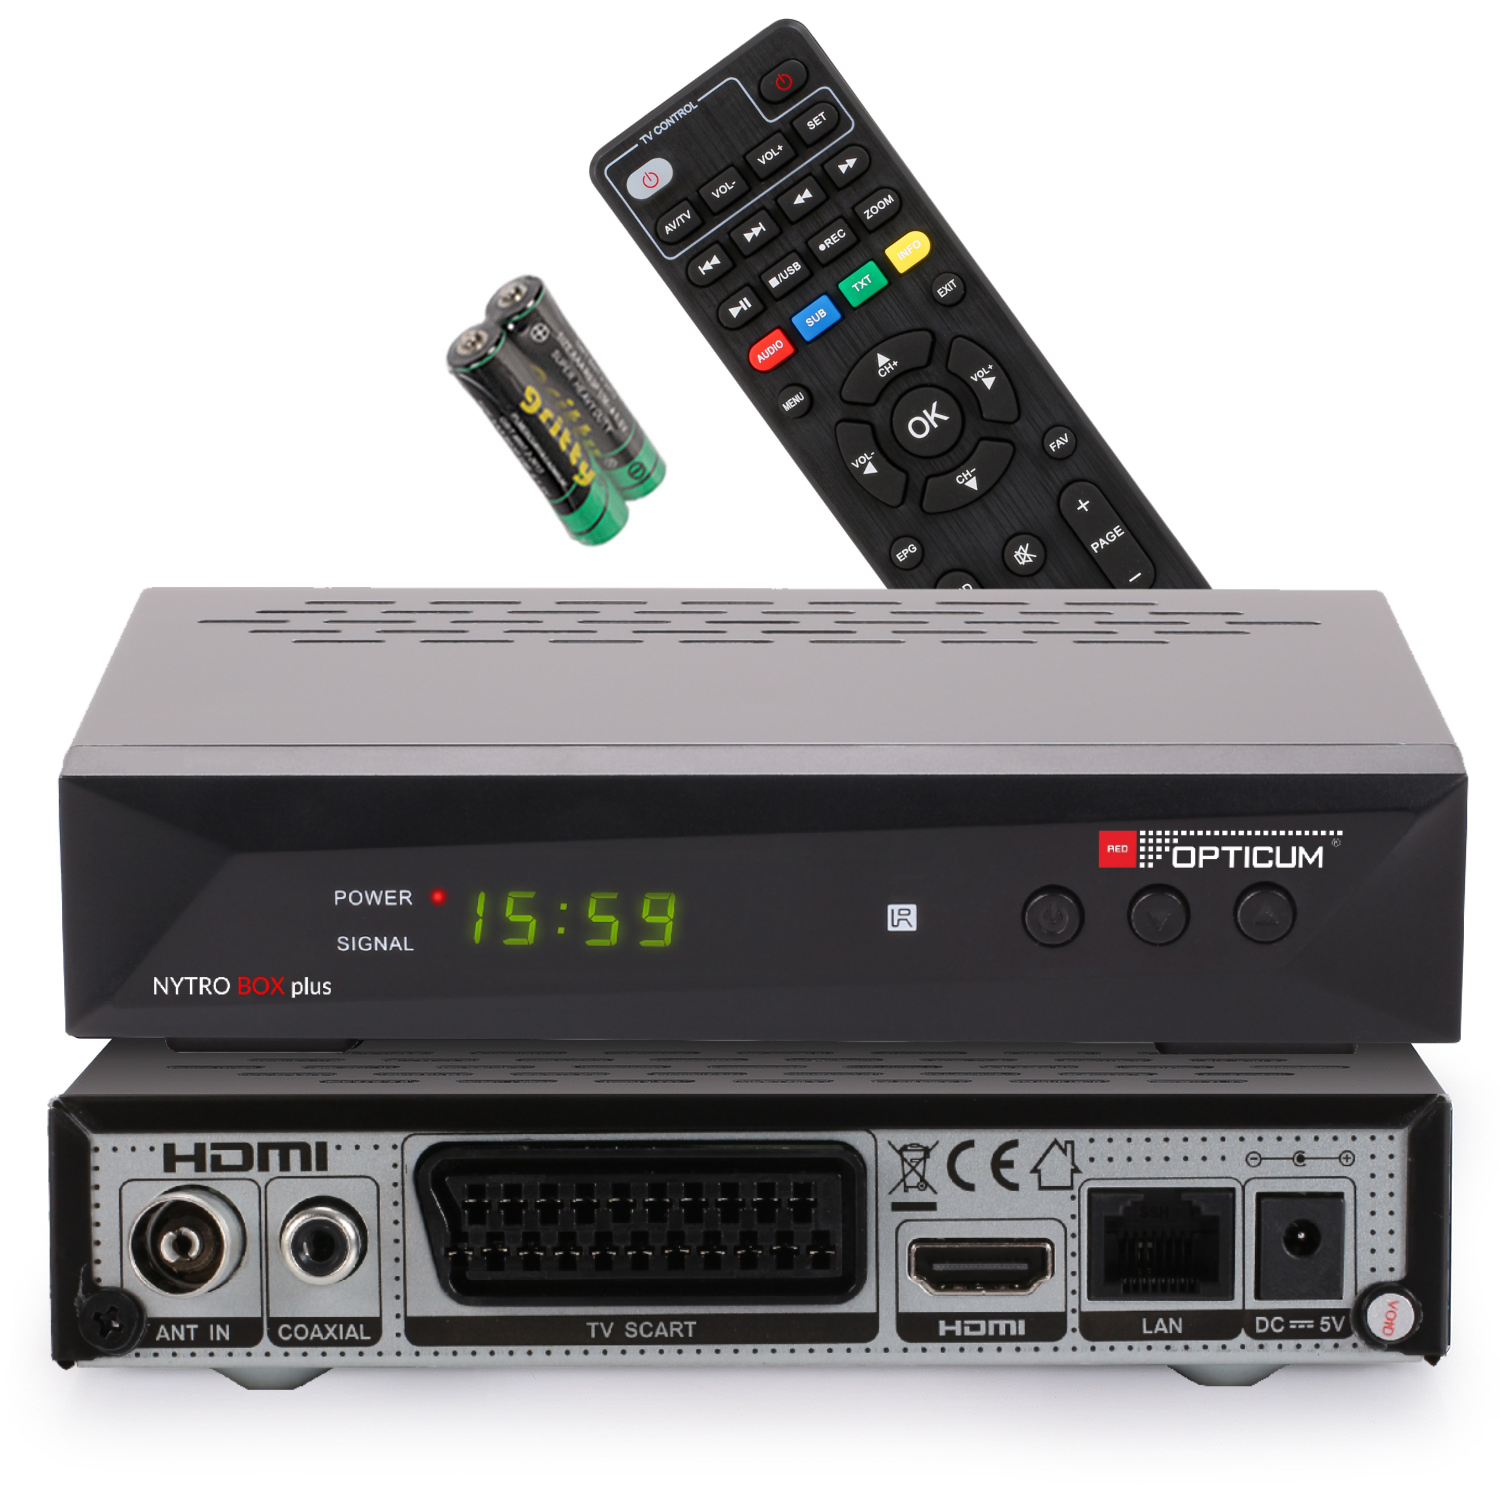 Hybrid-Receiver Receiver-Kabelreceiver DVB-T2 DVB-C & HD-TV DVB-T2 DVB-C2, PVR-Funktion, (H.264), Receiver DVB-C DVB-C, schwarz) DVB-T, I DVB-T2 PVR Nytrobox (HDTV, Plus OPTICUM (H.265), RED / DVB-T2 mit Hybrid